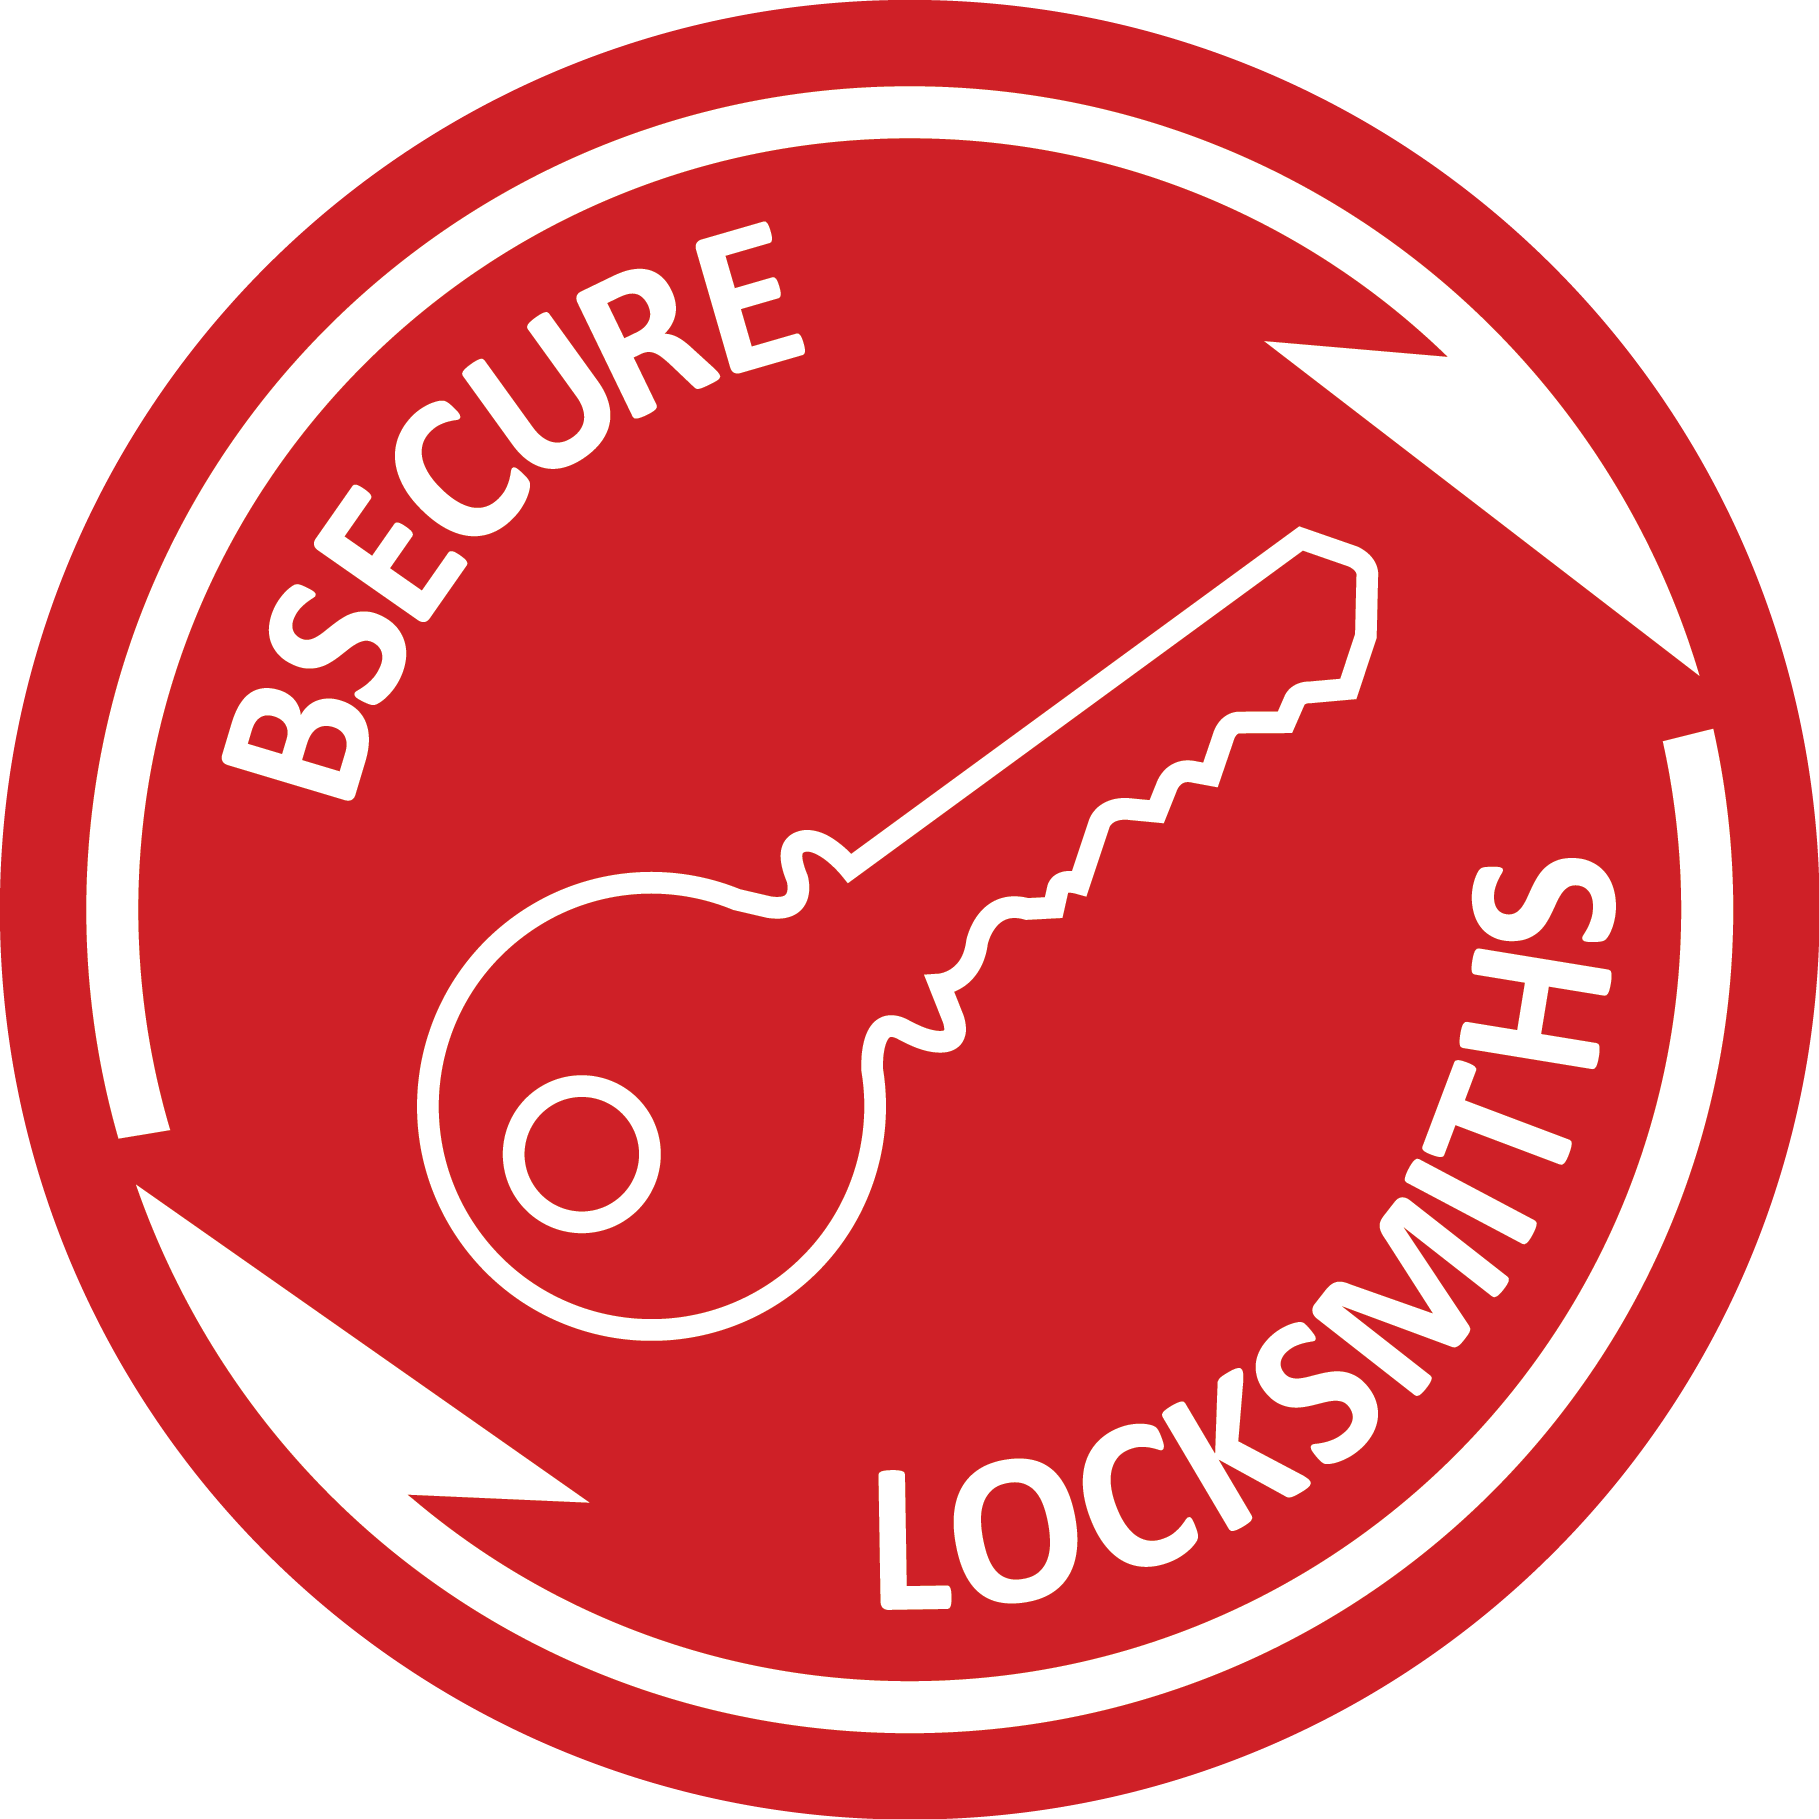 Bsecure Locksmiths Huntingdon